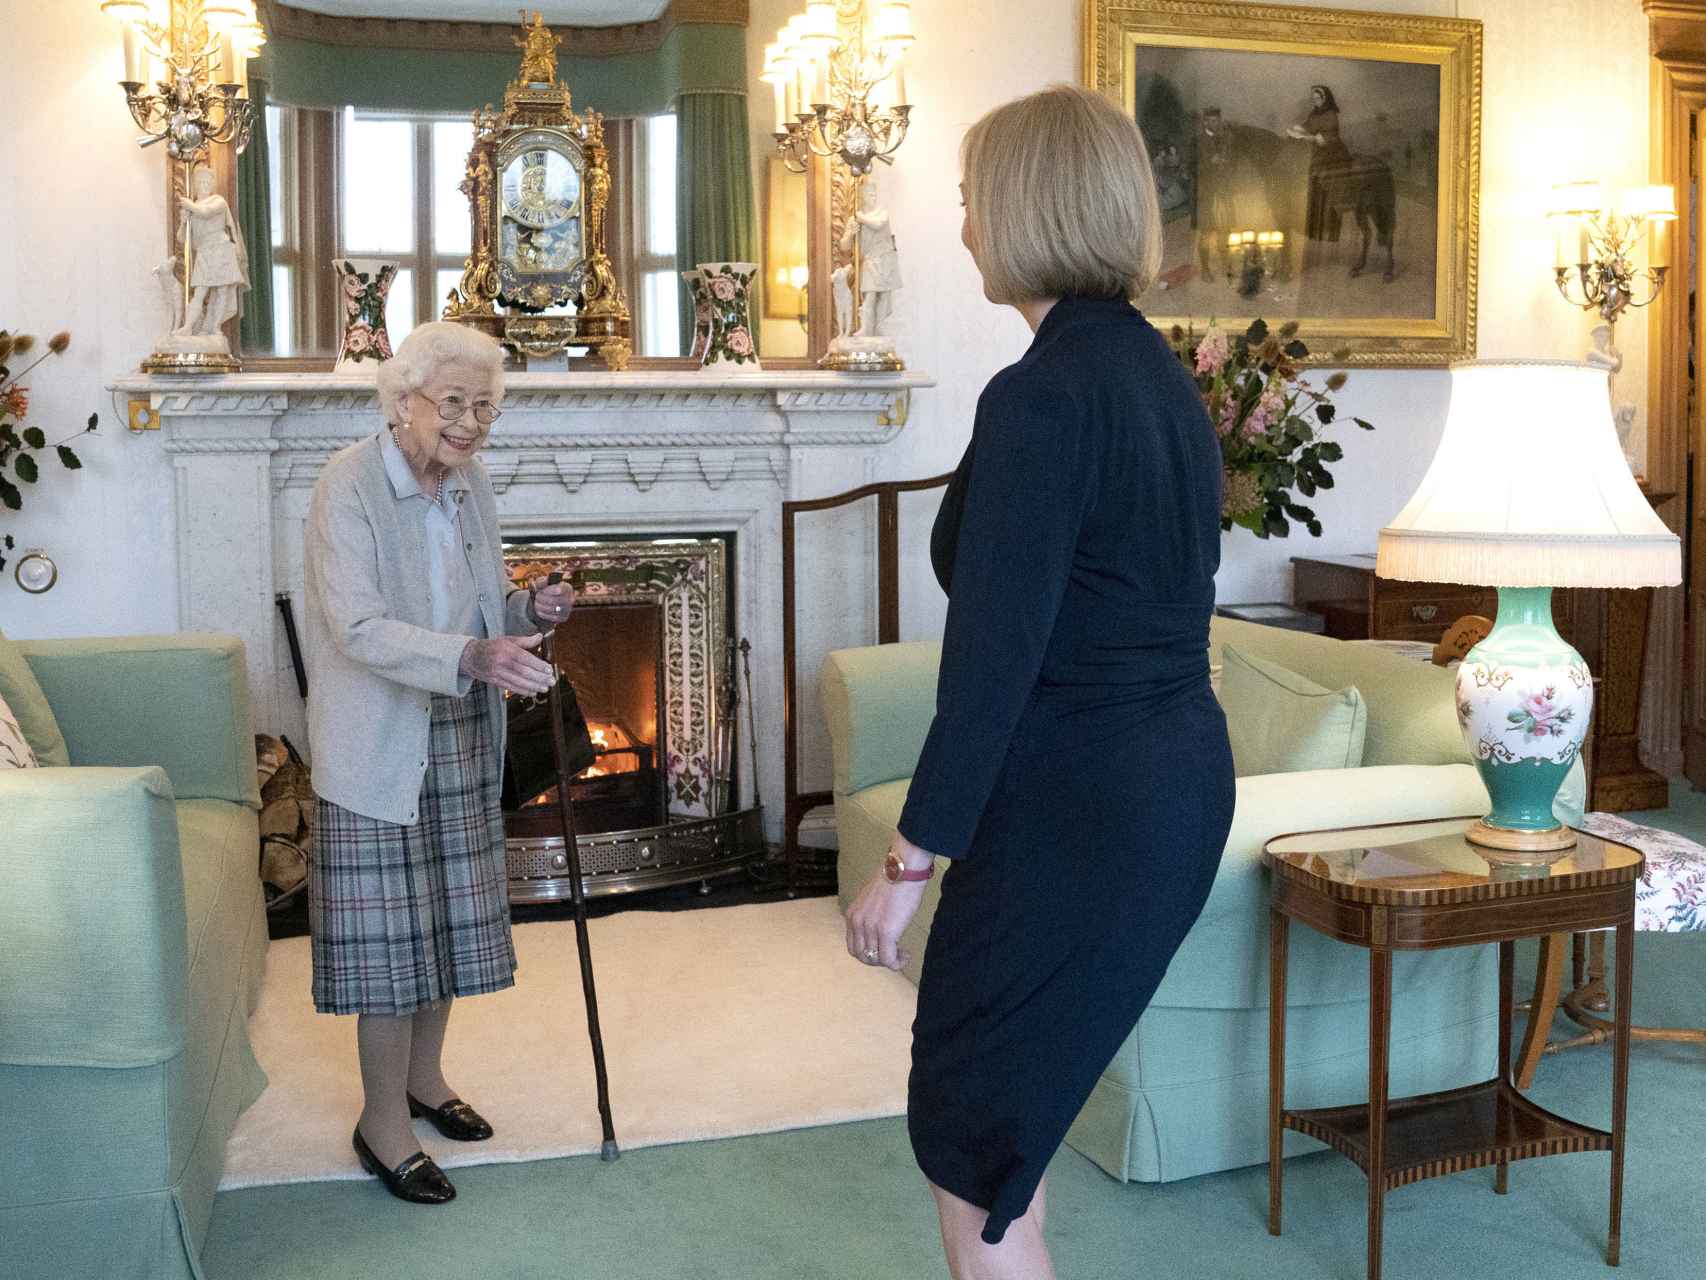 La reina Isabel II saluda a la primera ministra británica.